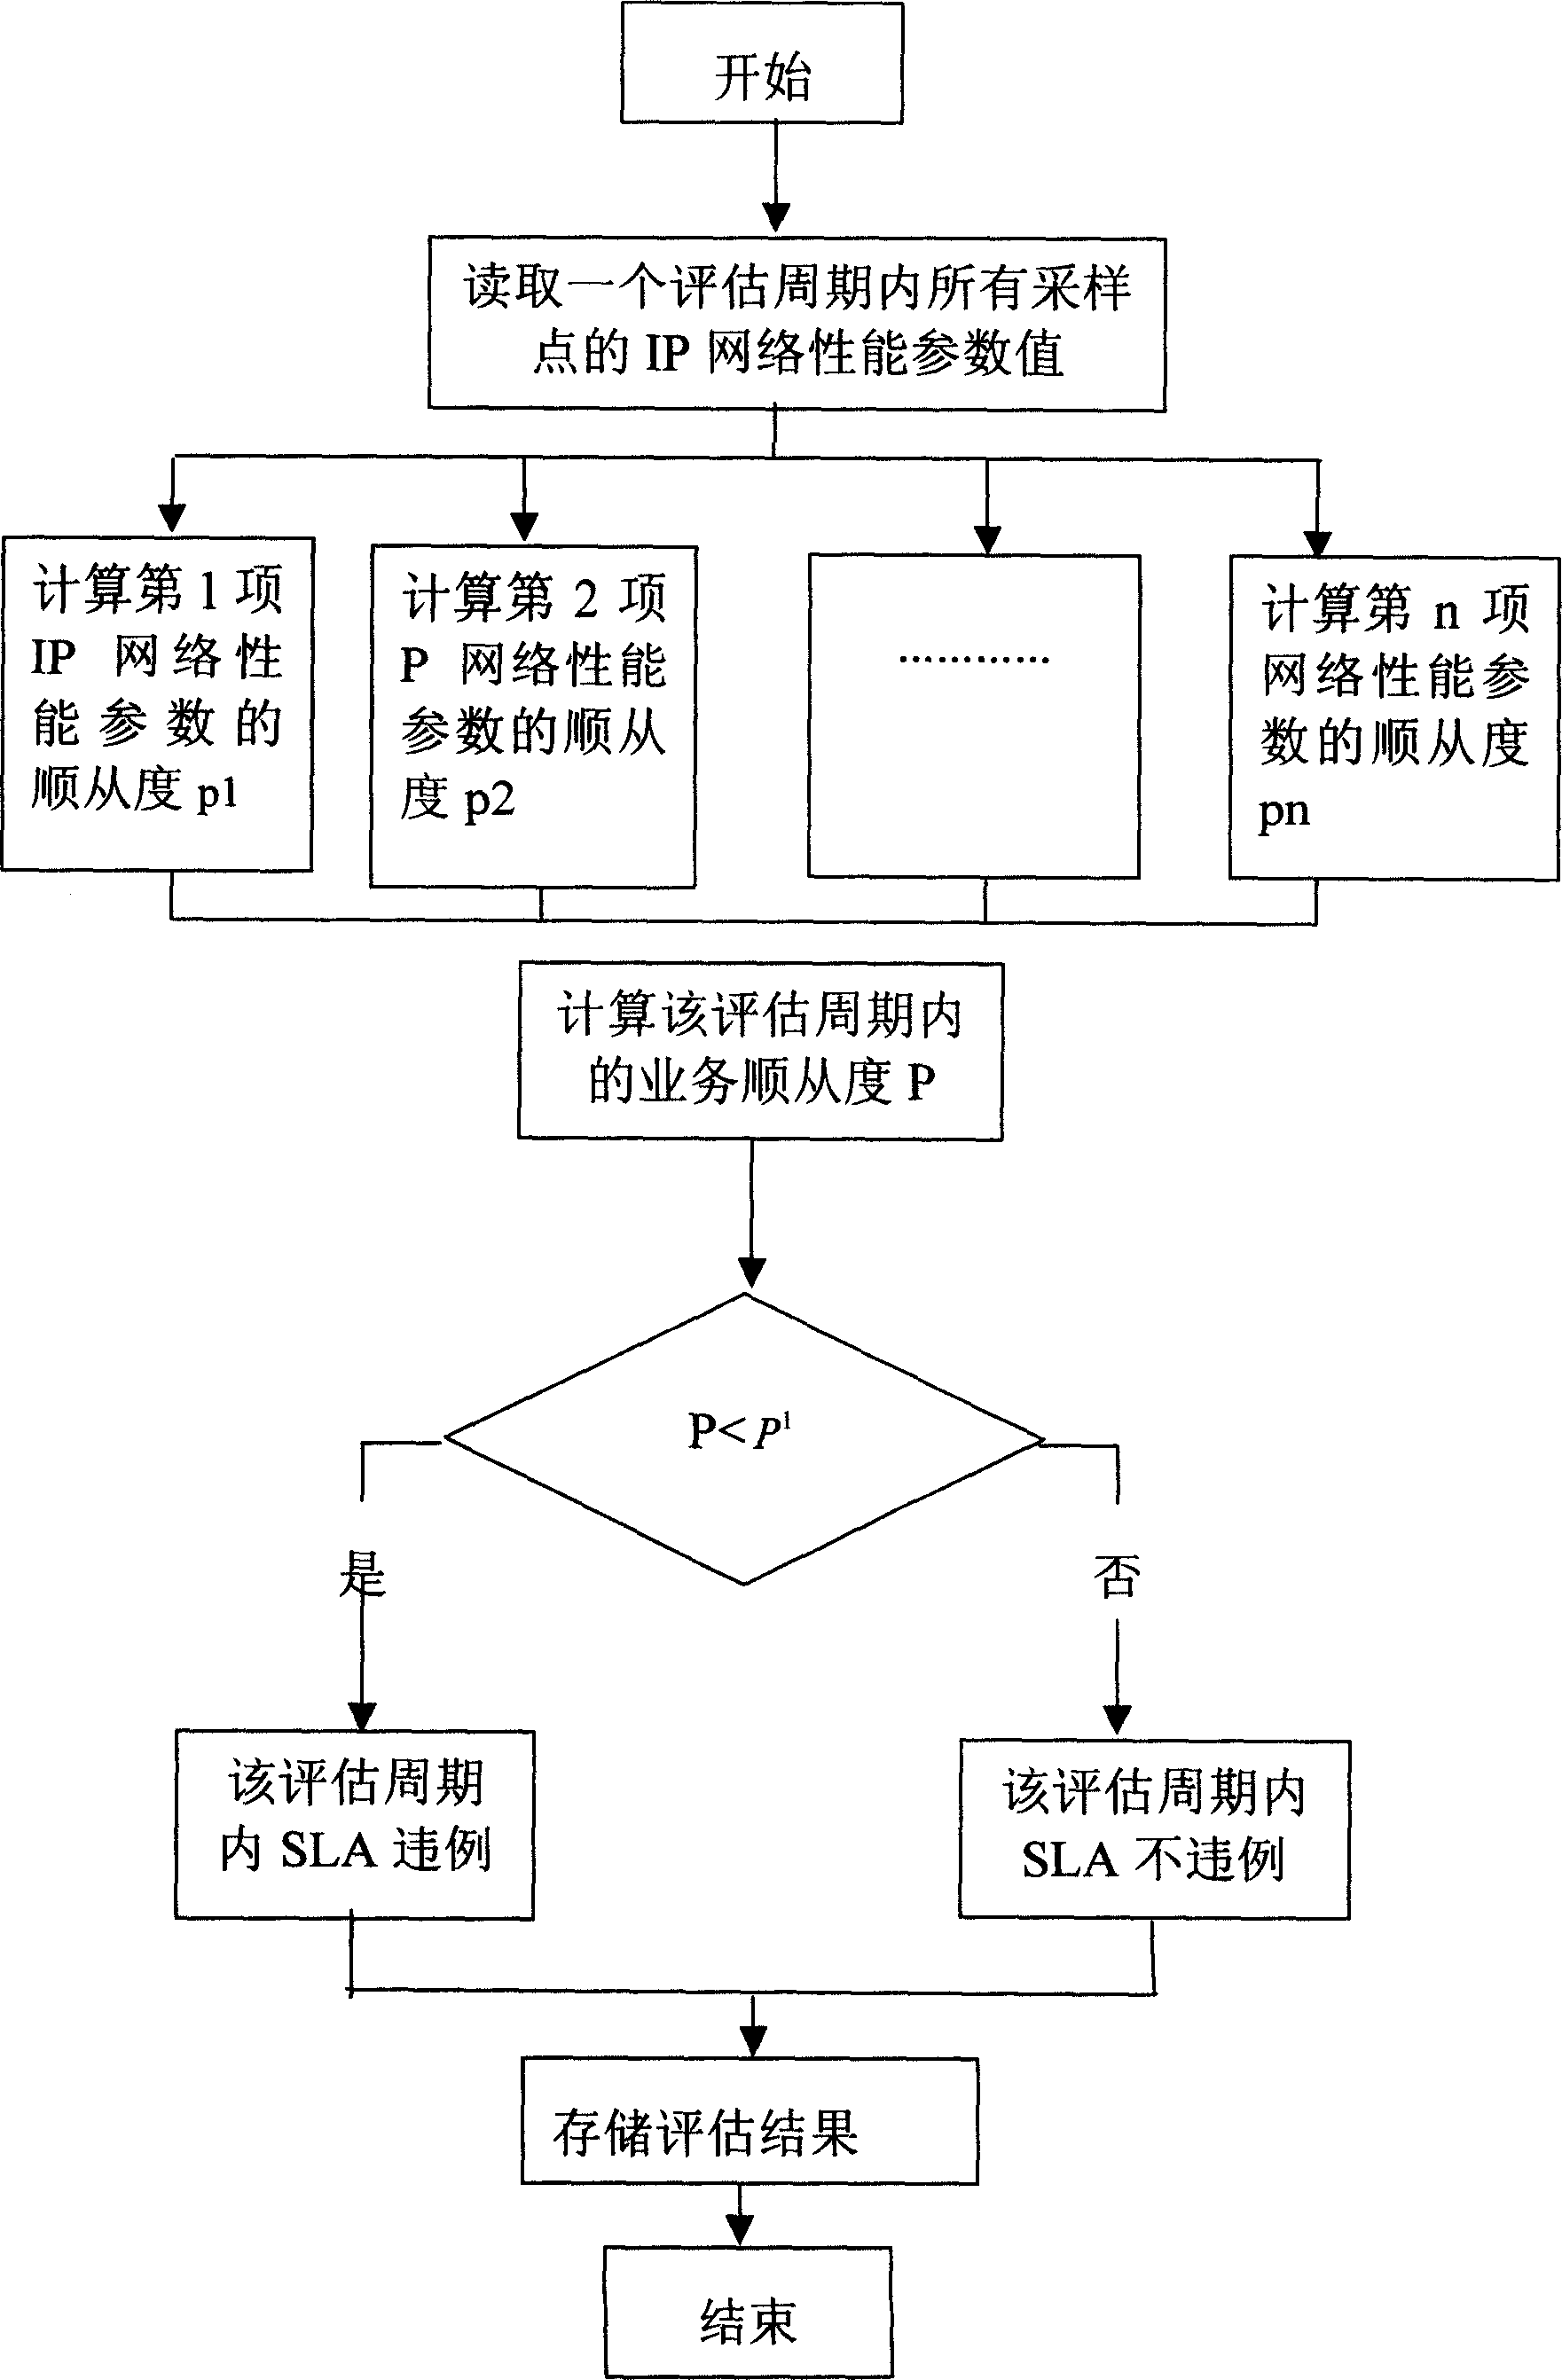 Method and apparatus for estimating terminal to terminal service grade protocol